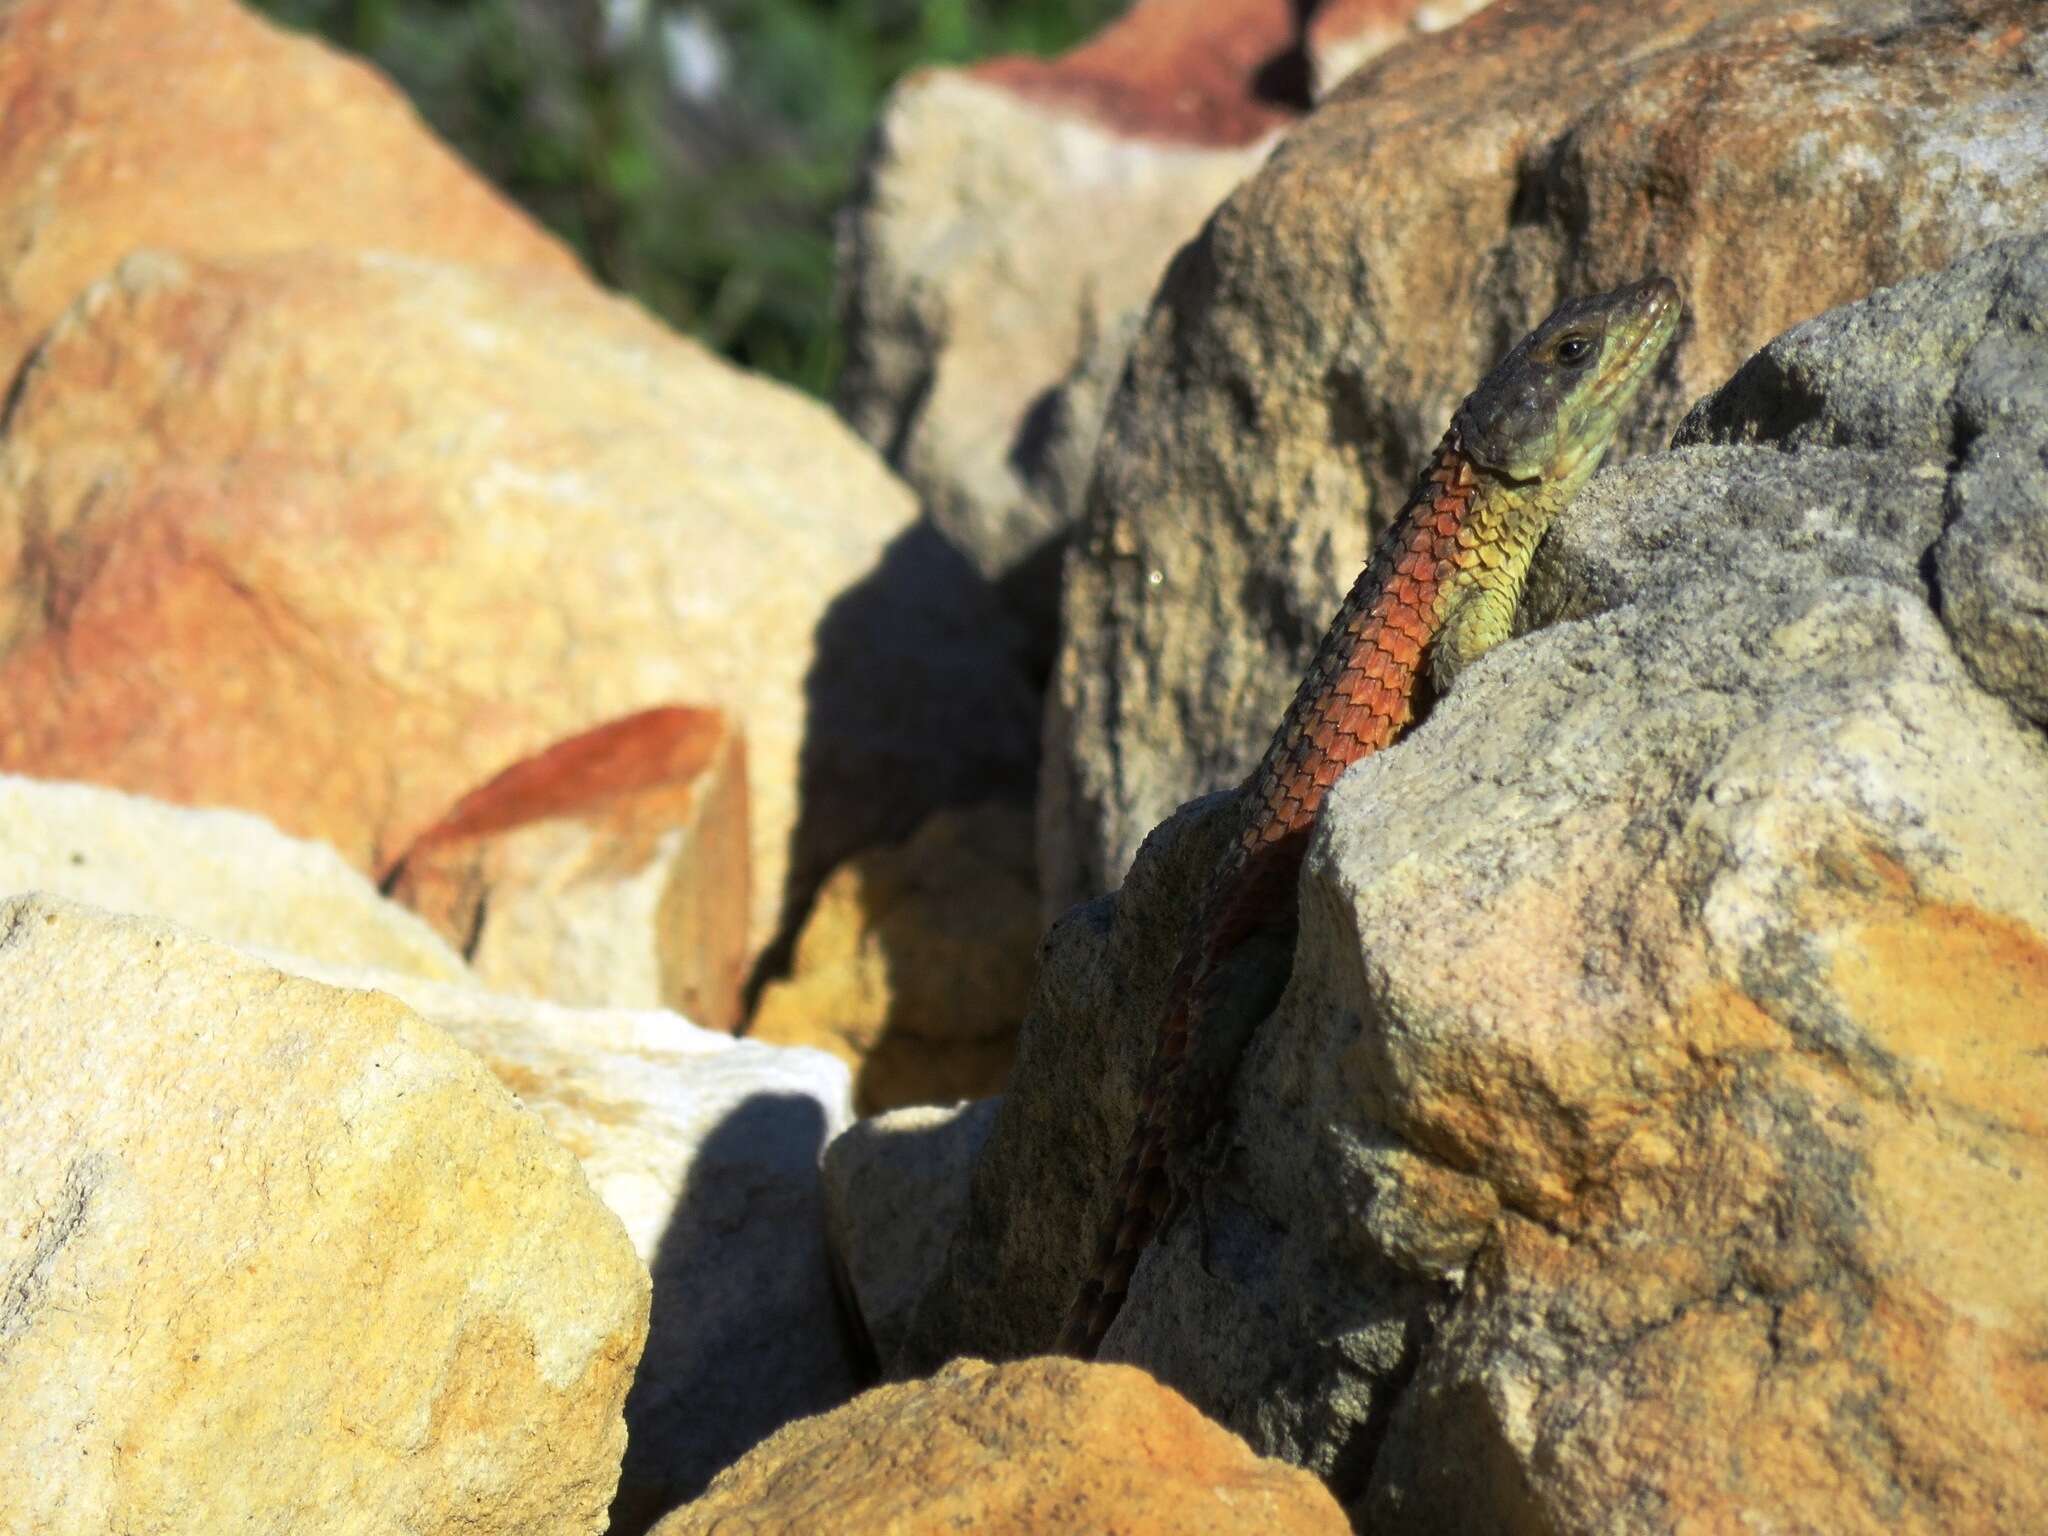 Image of Cape Girdled Lizard